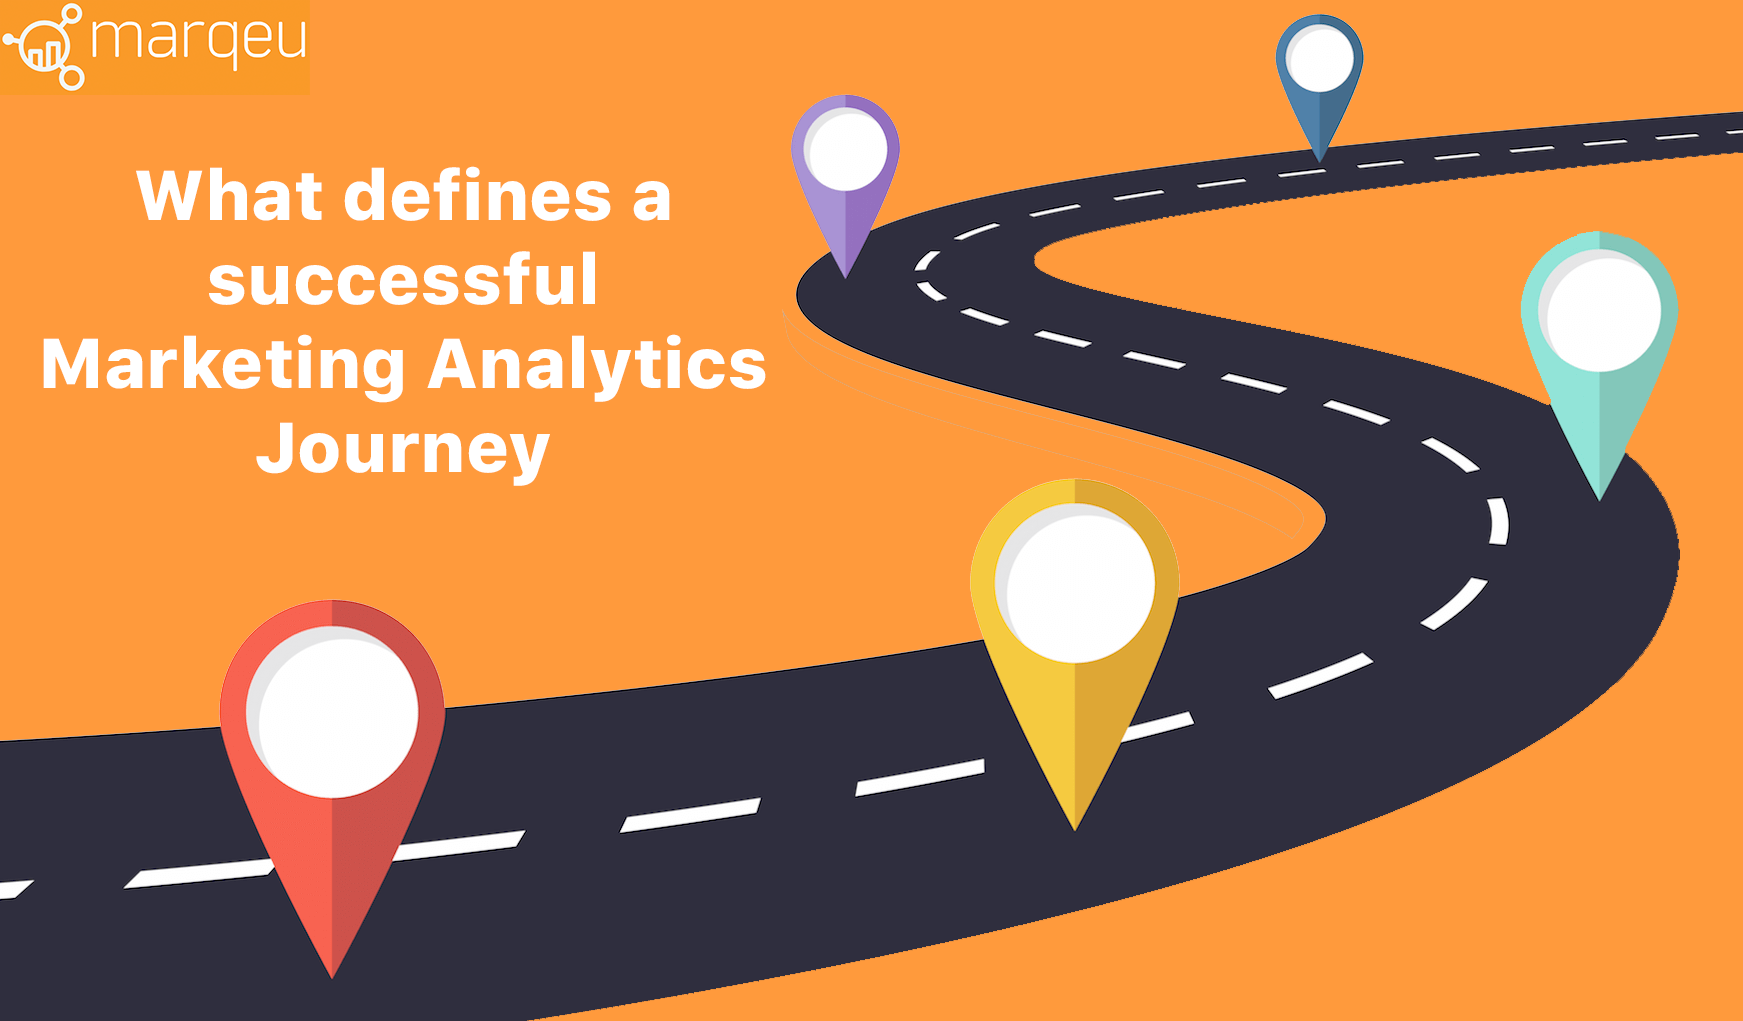 A Successful Marketing Analytics Journey